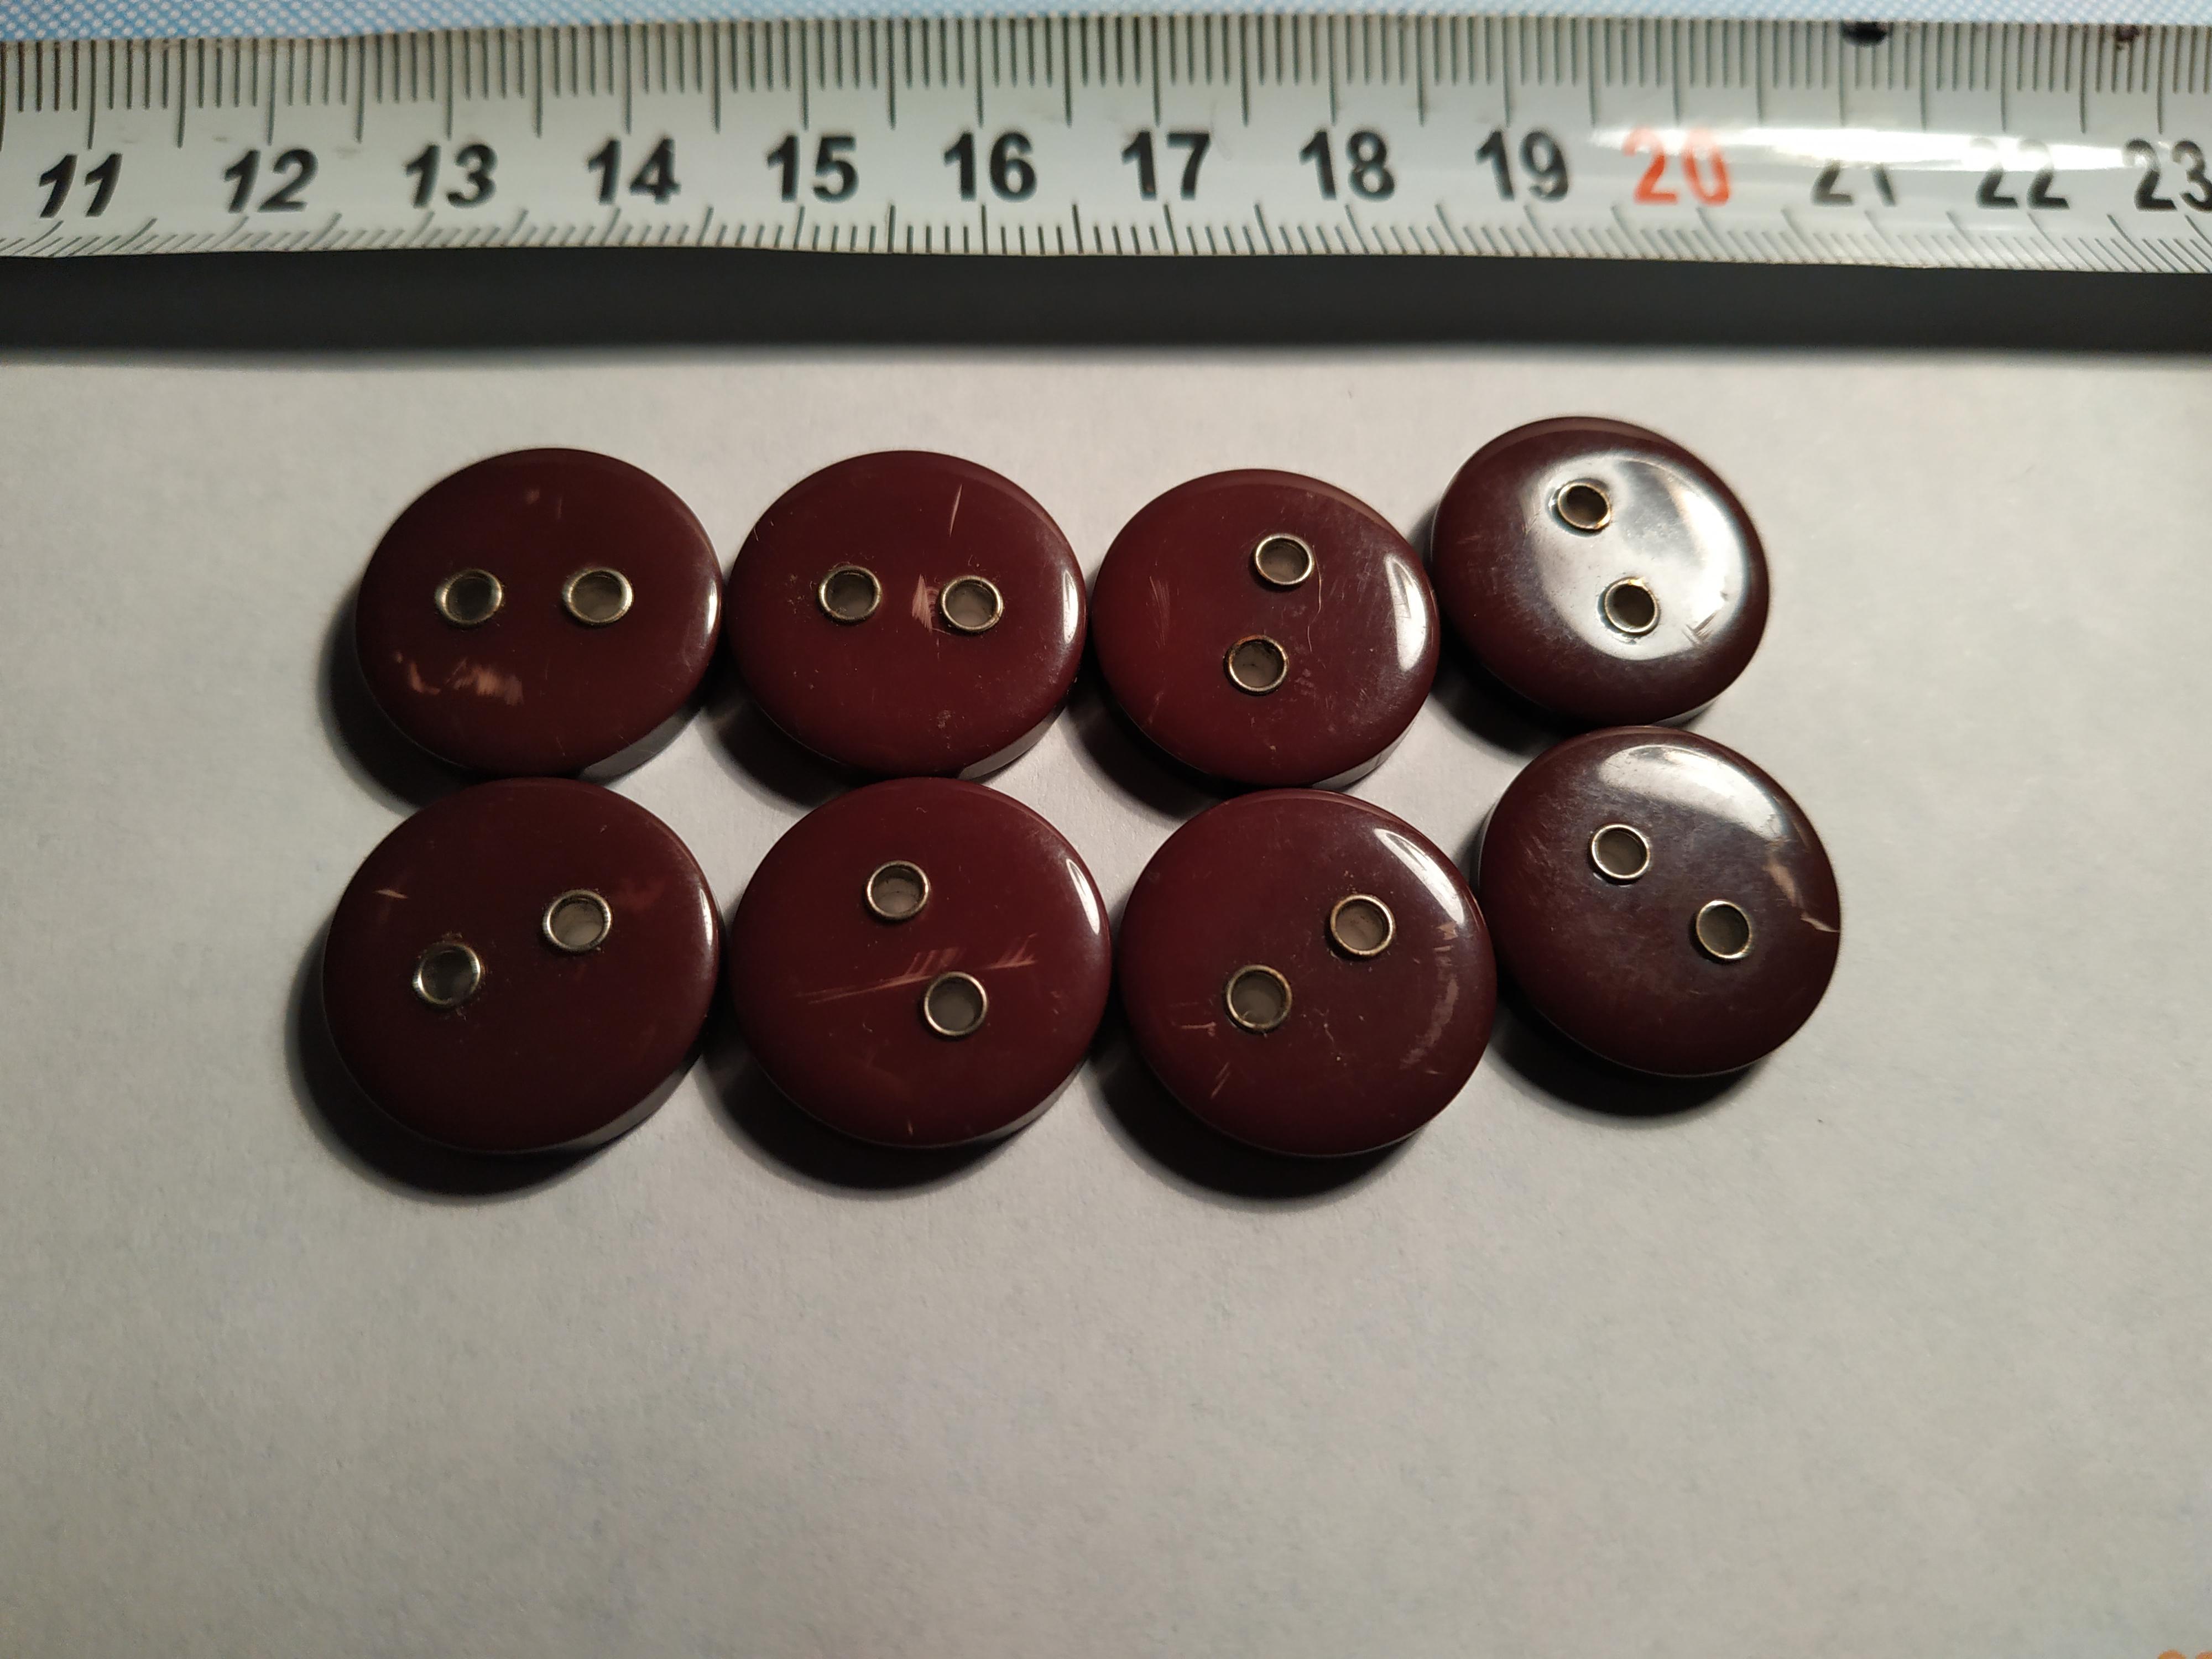 troc de troc 8 boutons moyens chocolat prune image 1